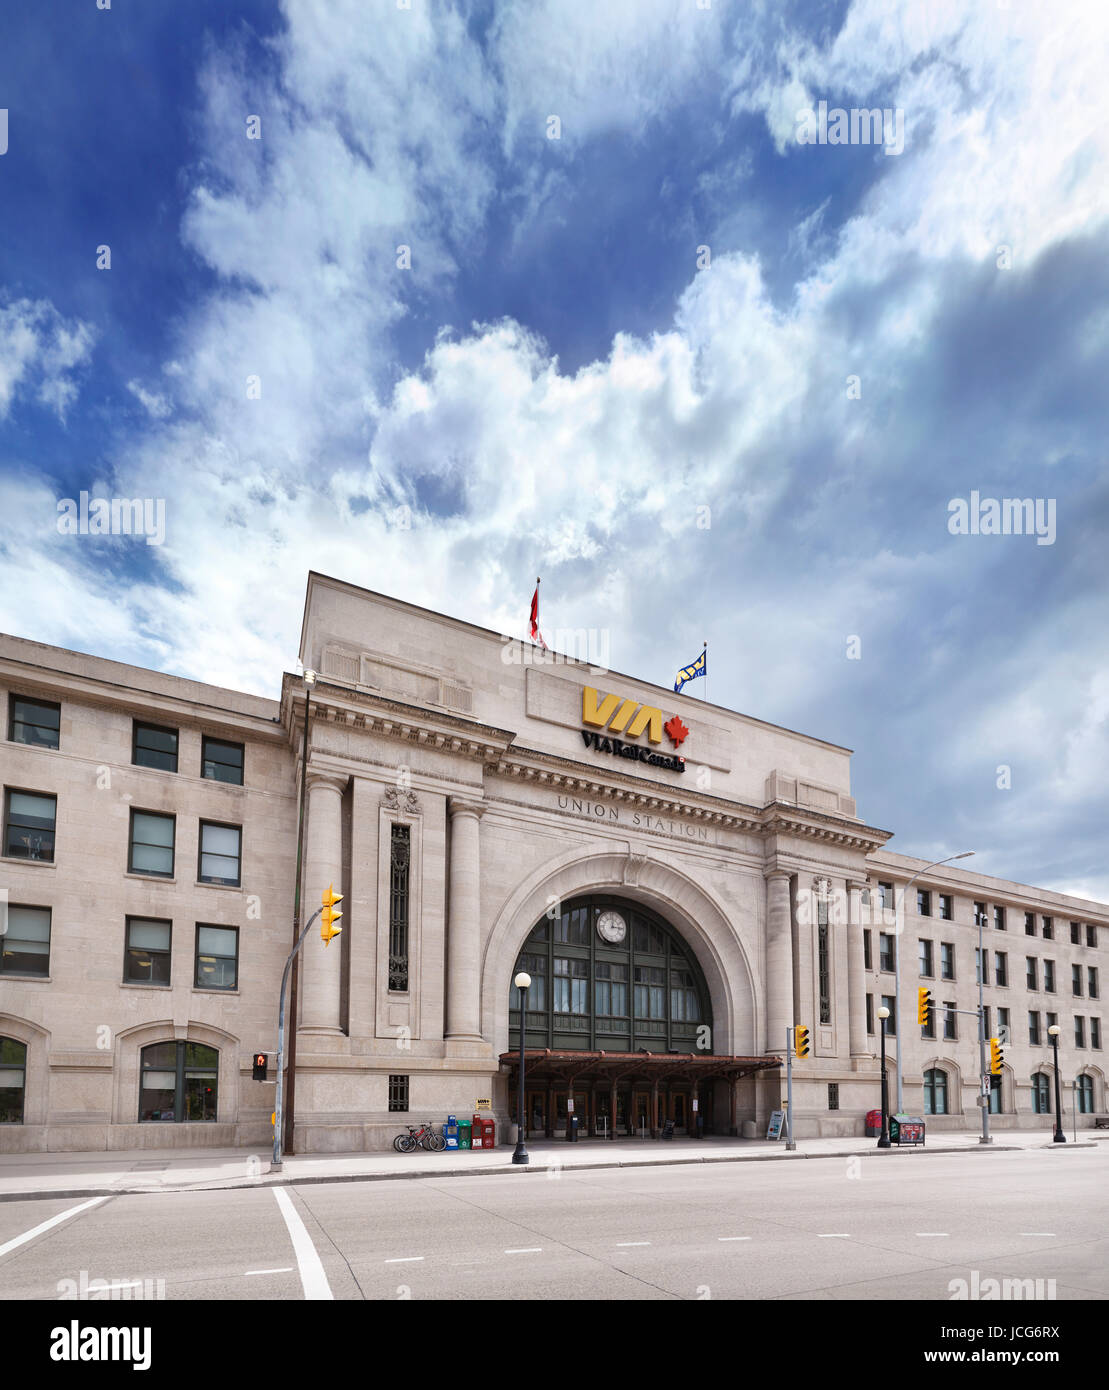 VIA Rail Canada Union Station und Winnipeg Railway Museum Gebäude Vorderansicht. Main Street, Winnipeg, Manitoba, Kanada 2017. Stockfoto